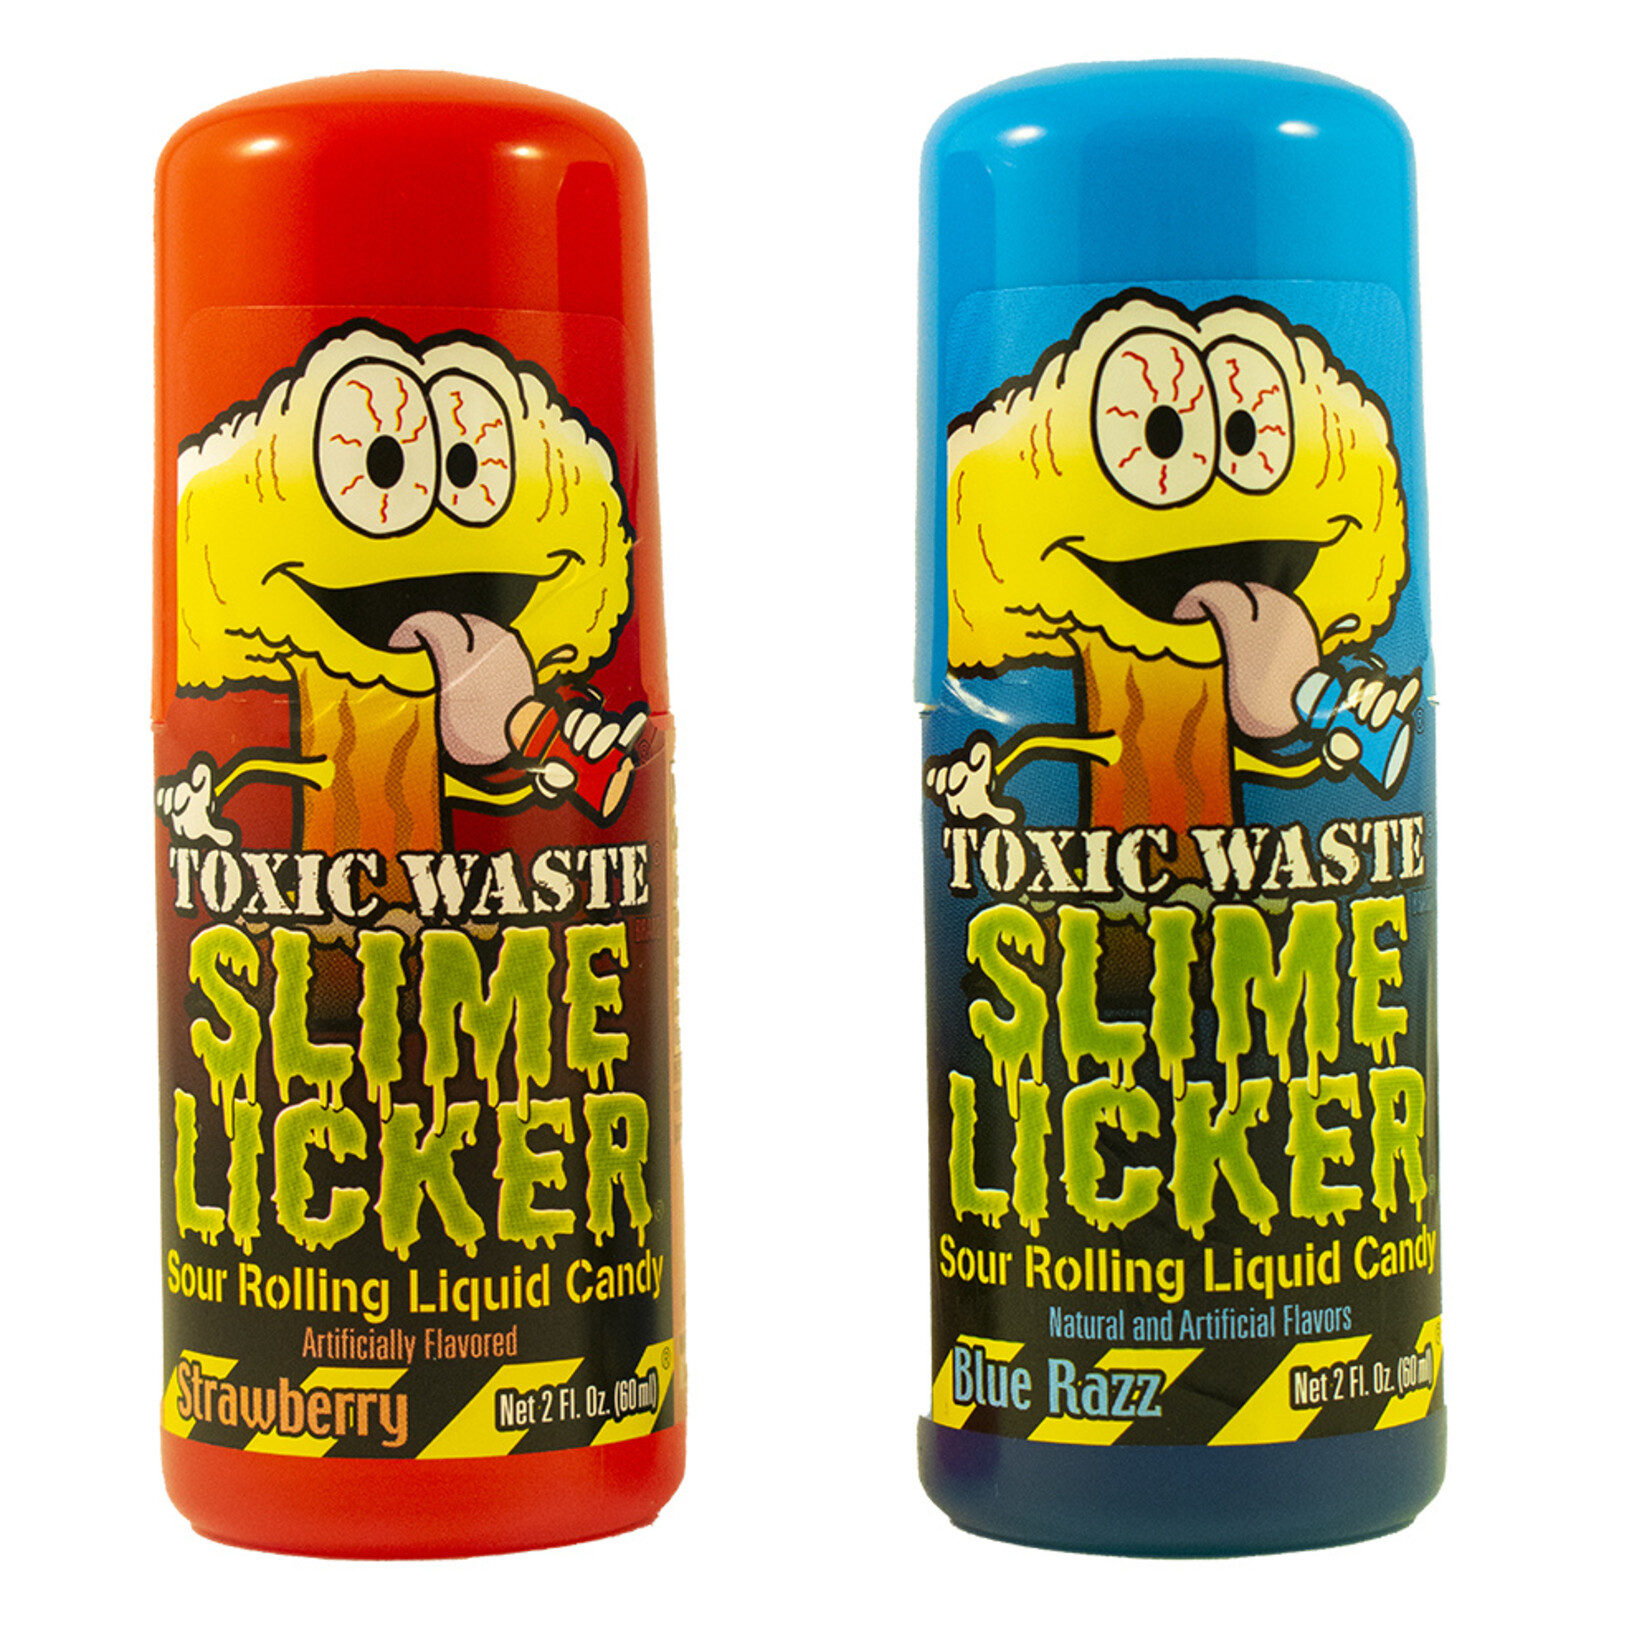 Toxic Waste Toxic Waste Slime Licker